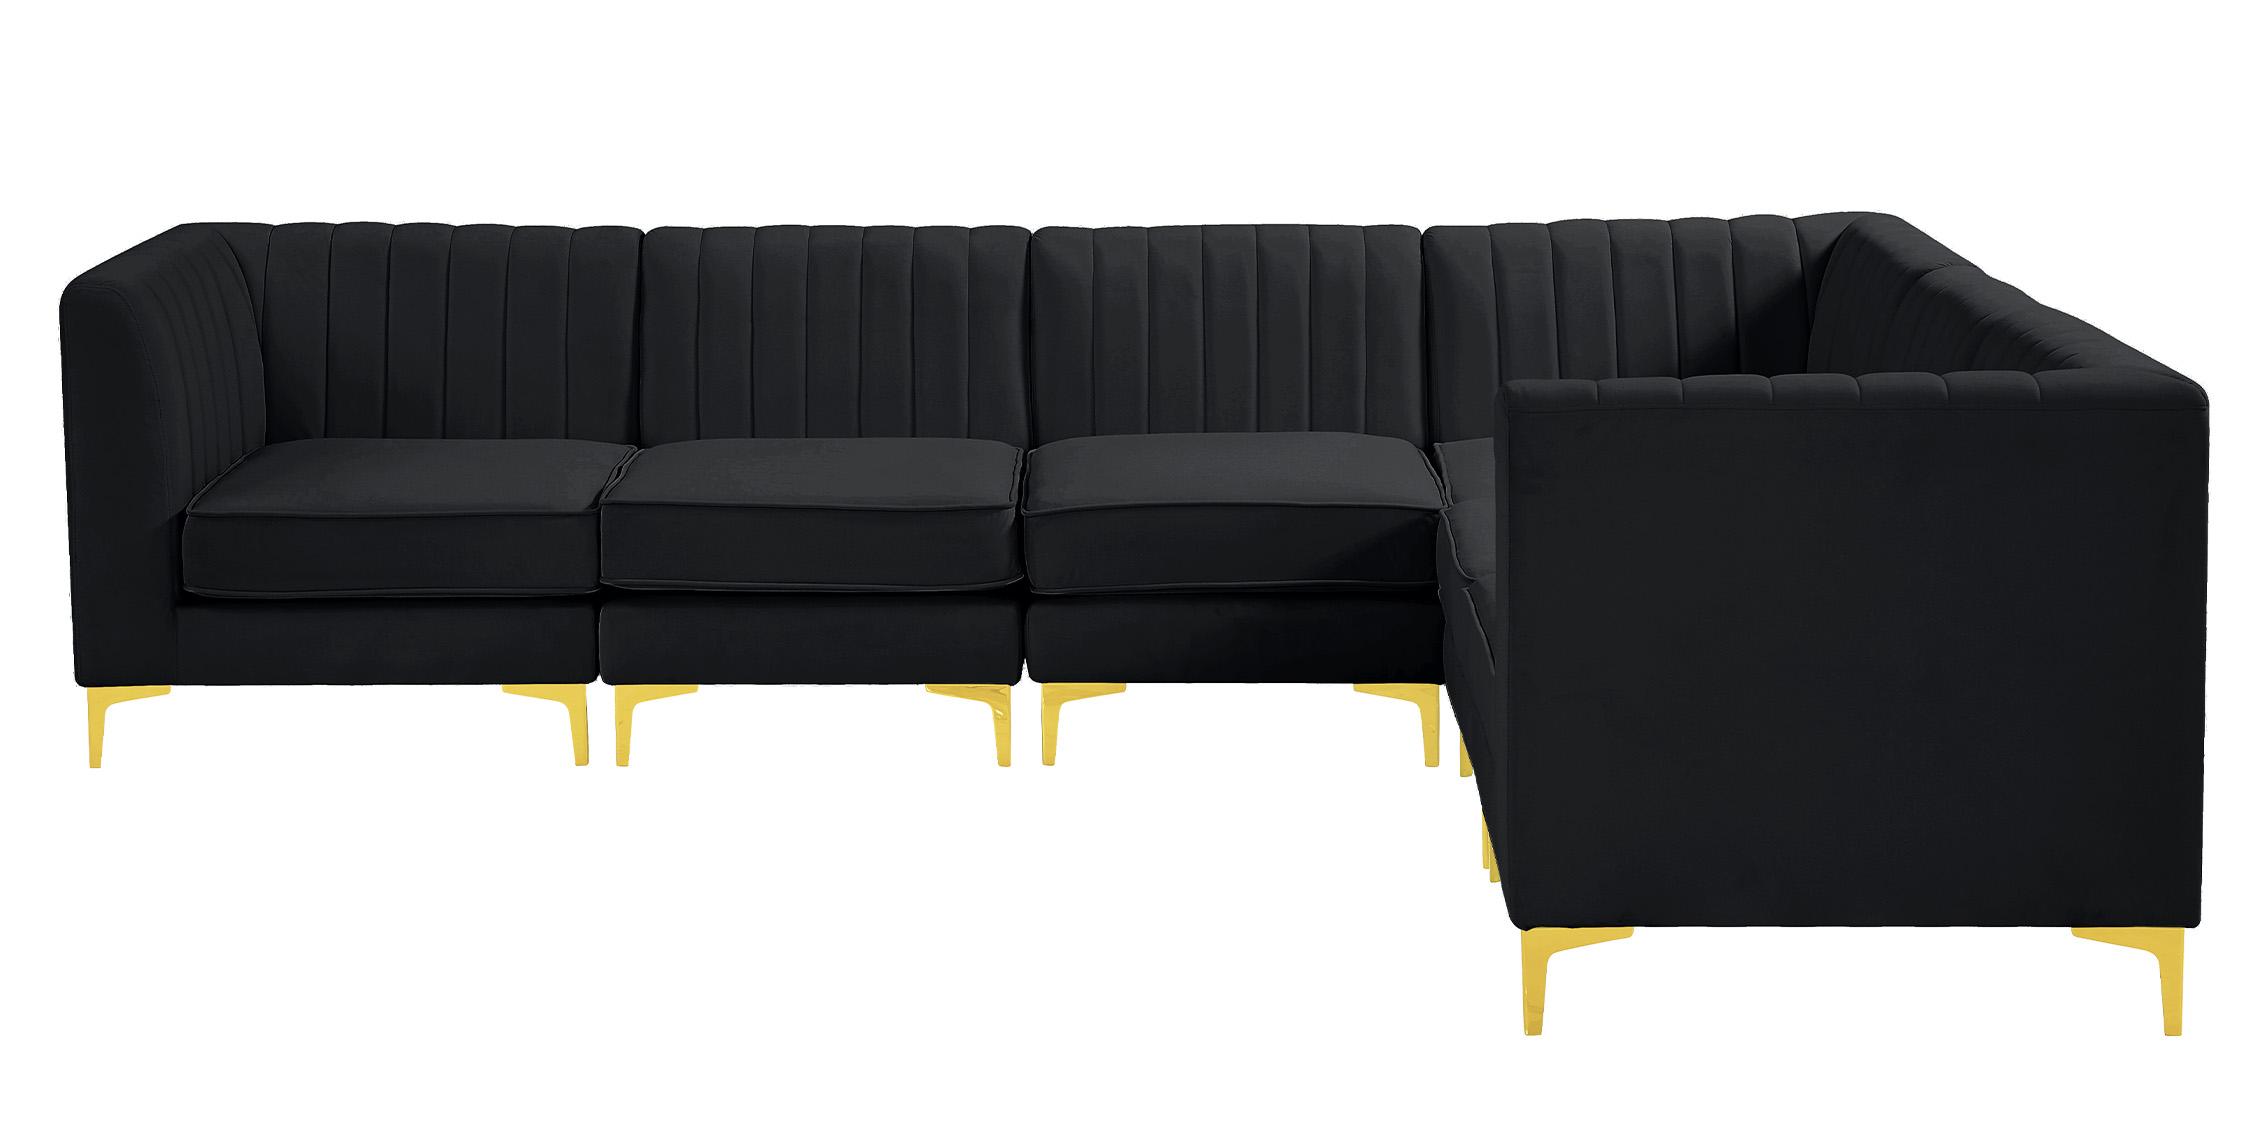 

    
604Black-Sec6A Meridian Furniture Modular Sectional Sofa
